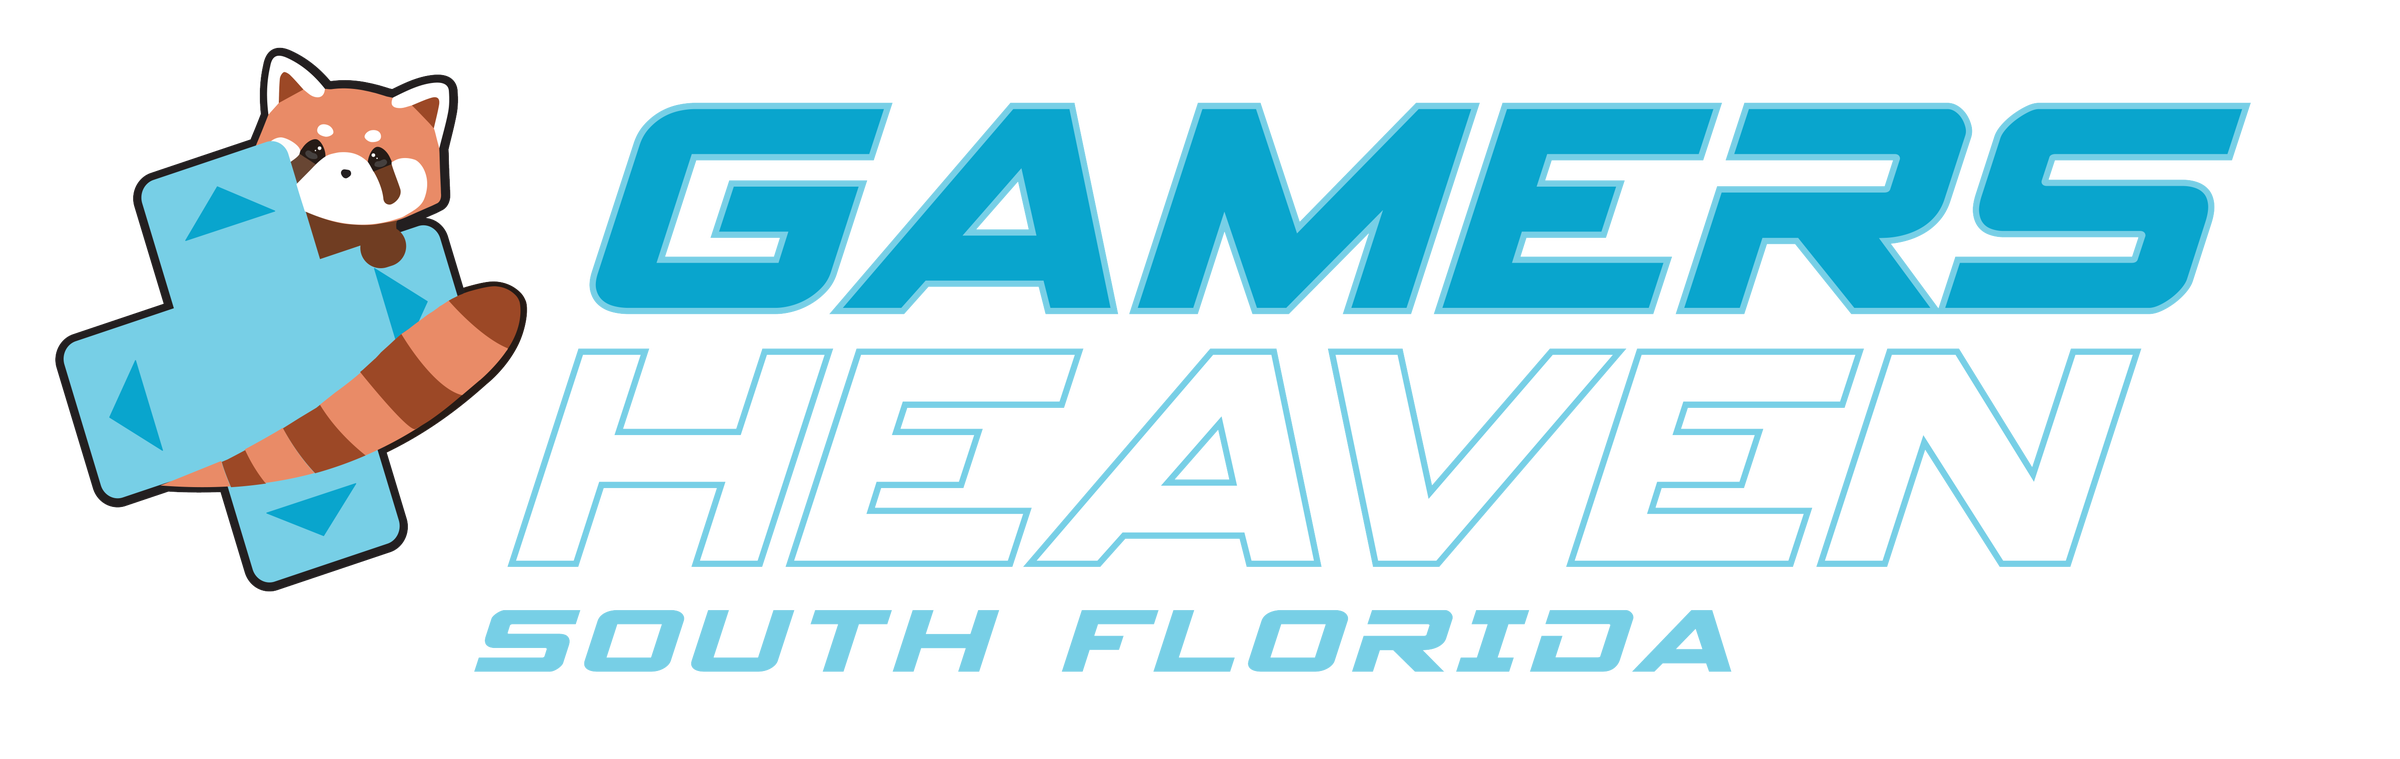 South Florida Anime & Gamers Club